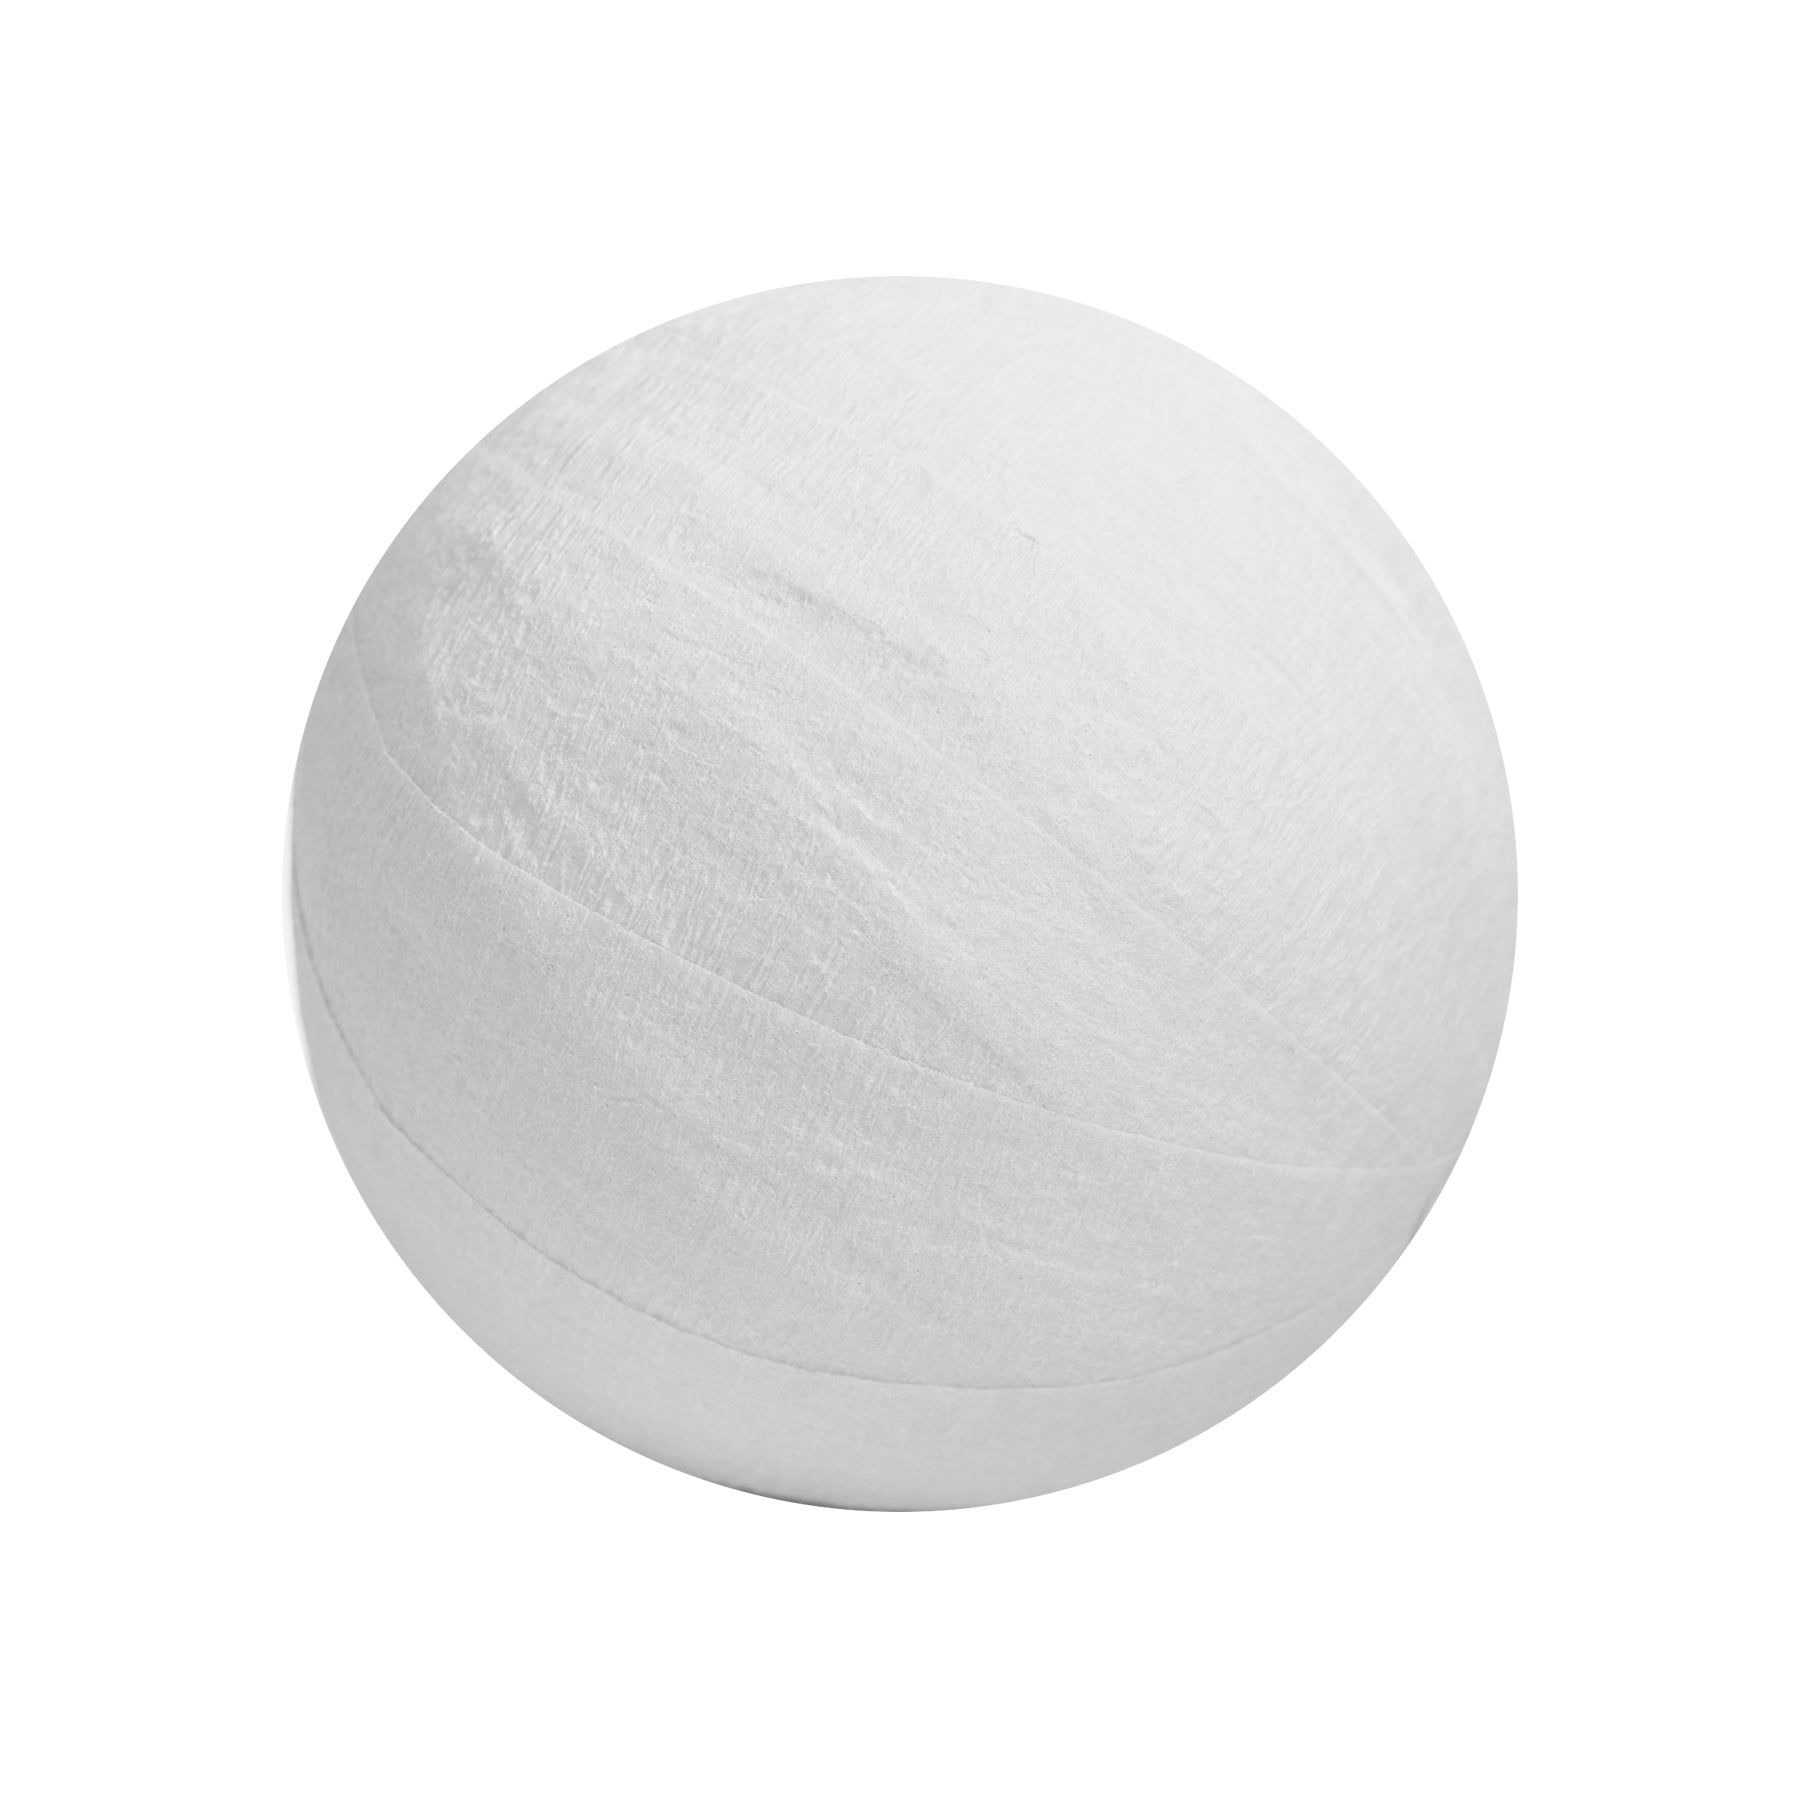 Buy Splendid Mini Styrofoam Balls Today At Cheap Prices 